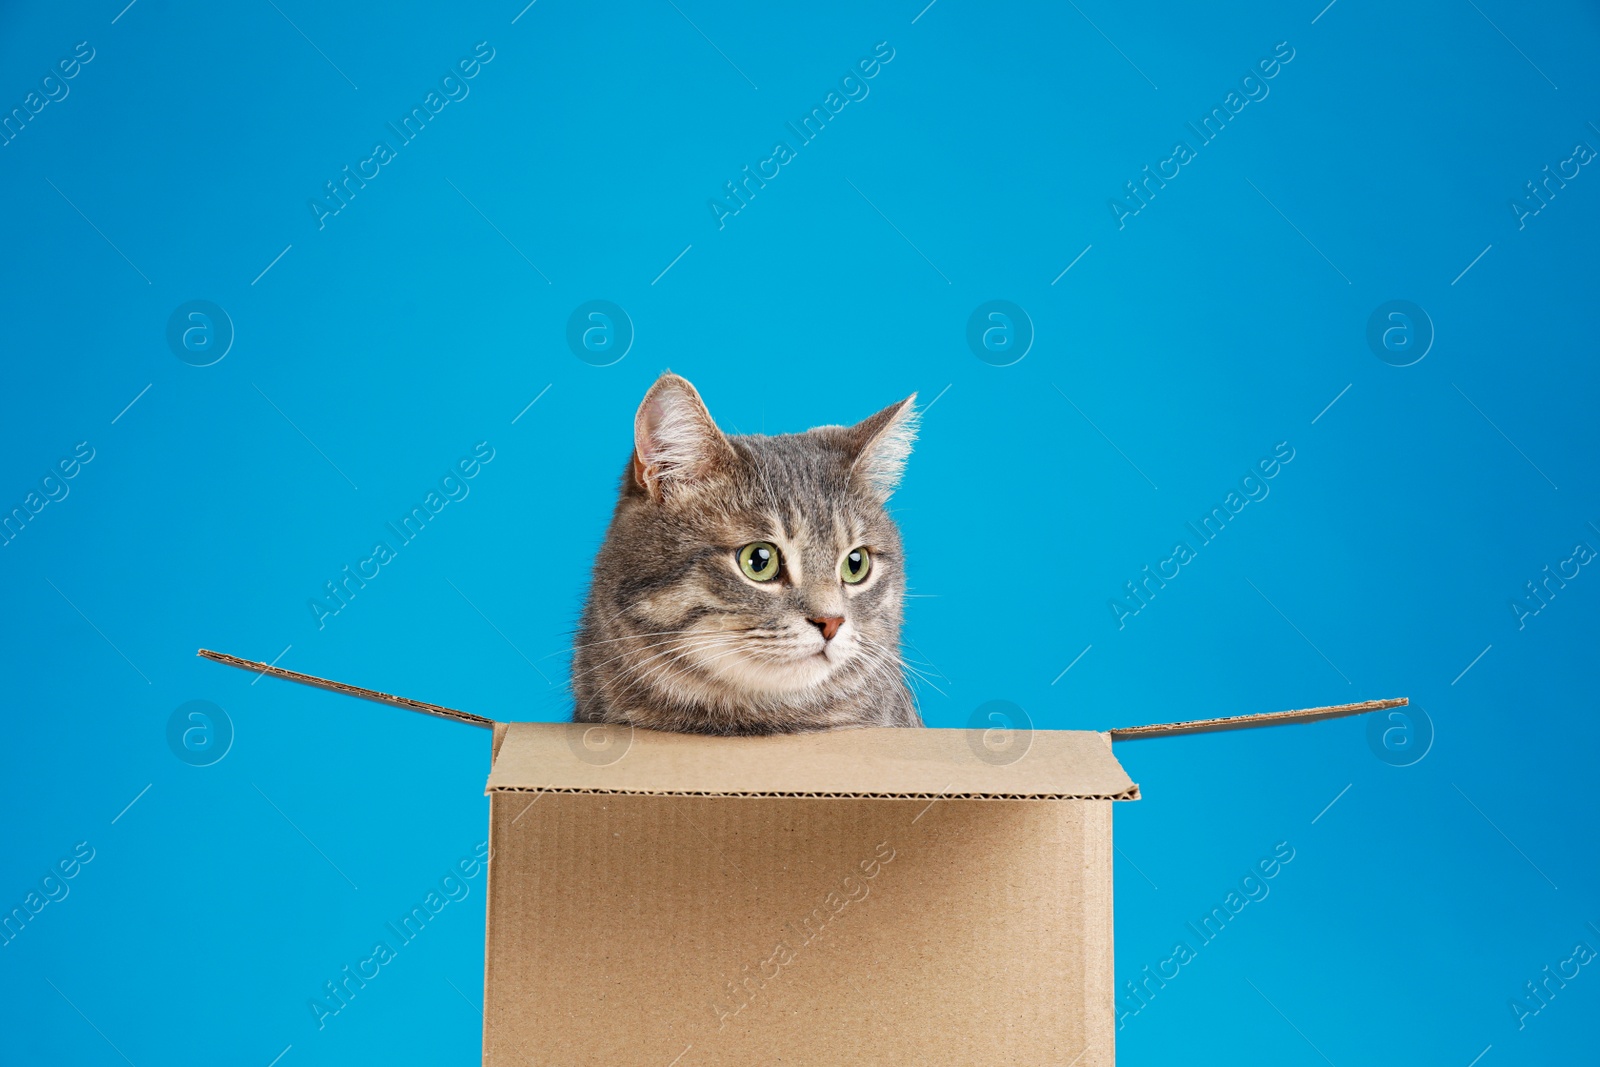 Photo of Cute grey tabby cat sitting in cardboard box on blue background